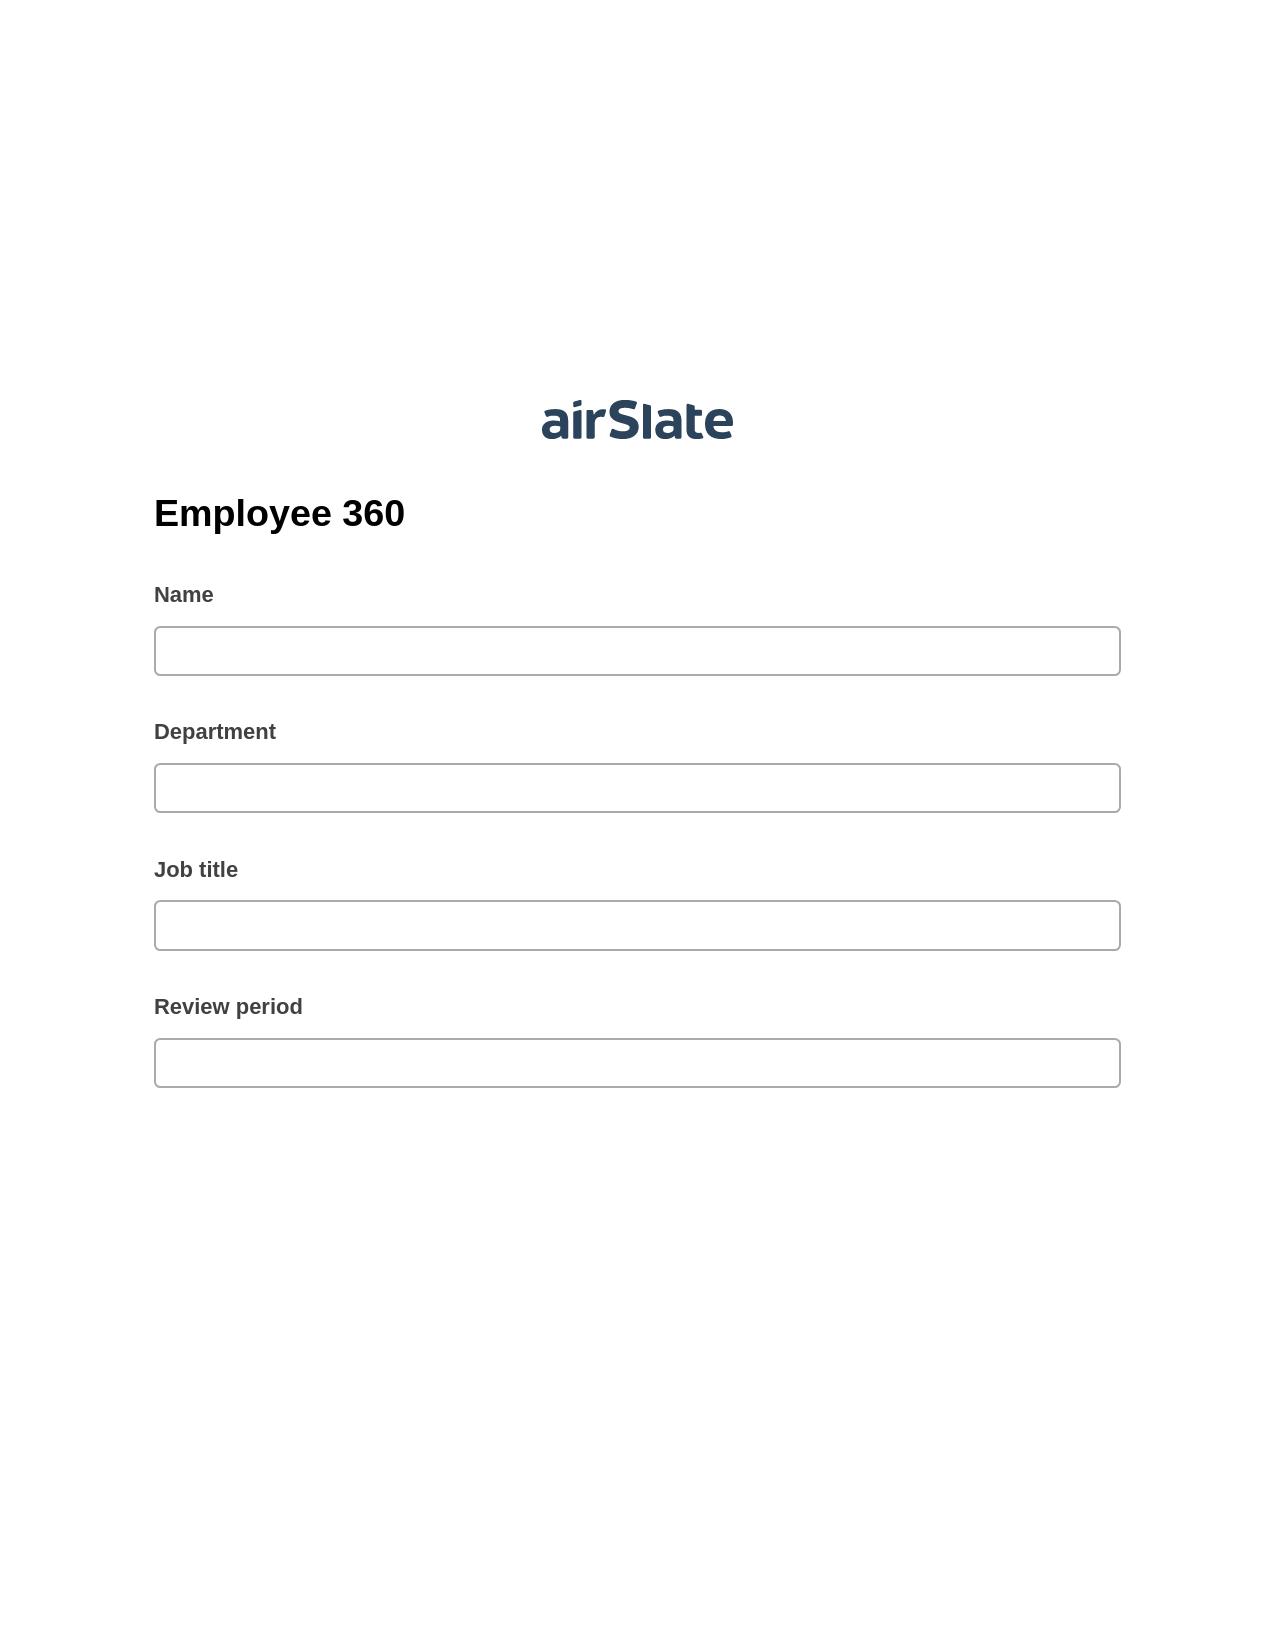 Employee 360 Pre-fill from CSV File Bot, Create QuickBooks Invoice Bot, Webhook Postfinish Bot